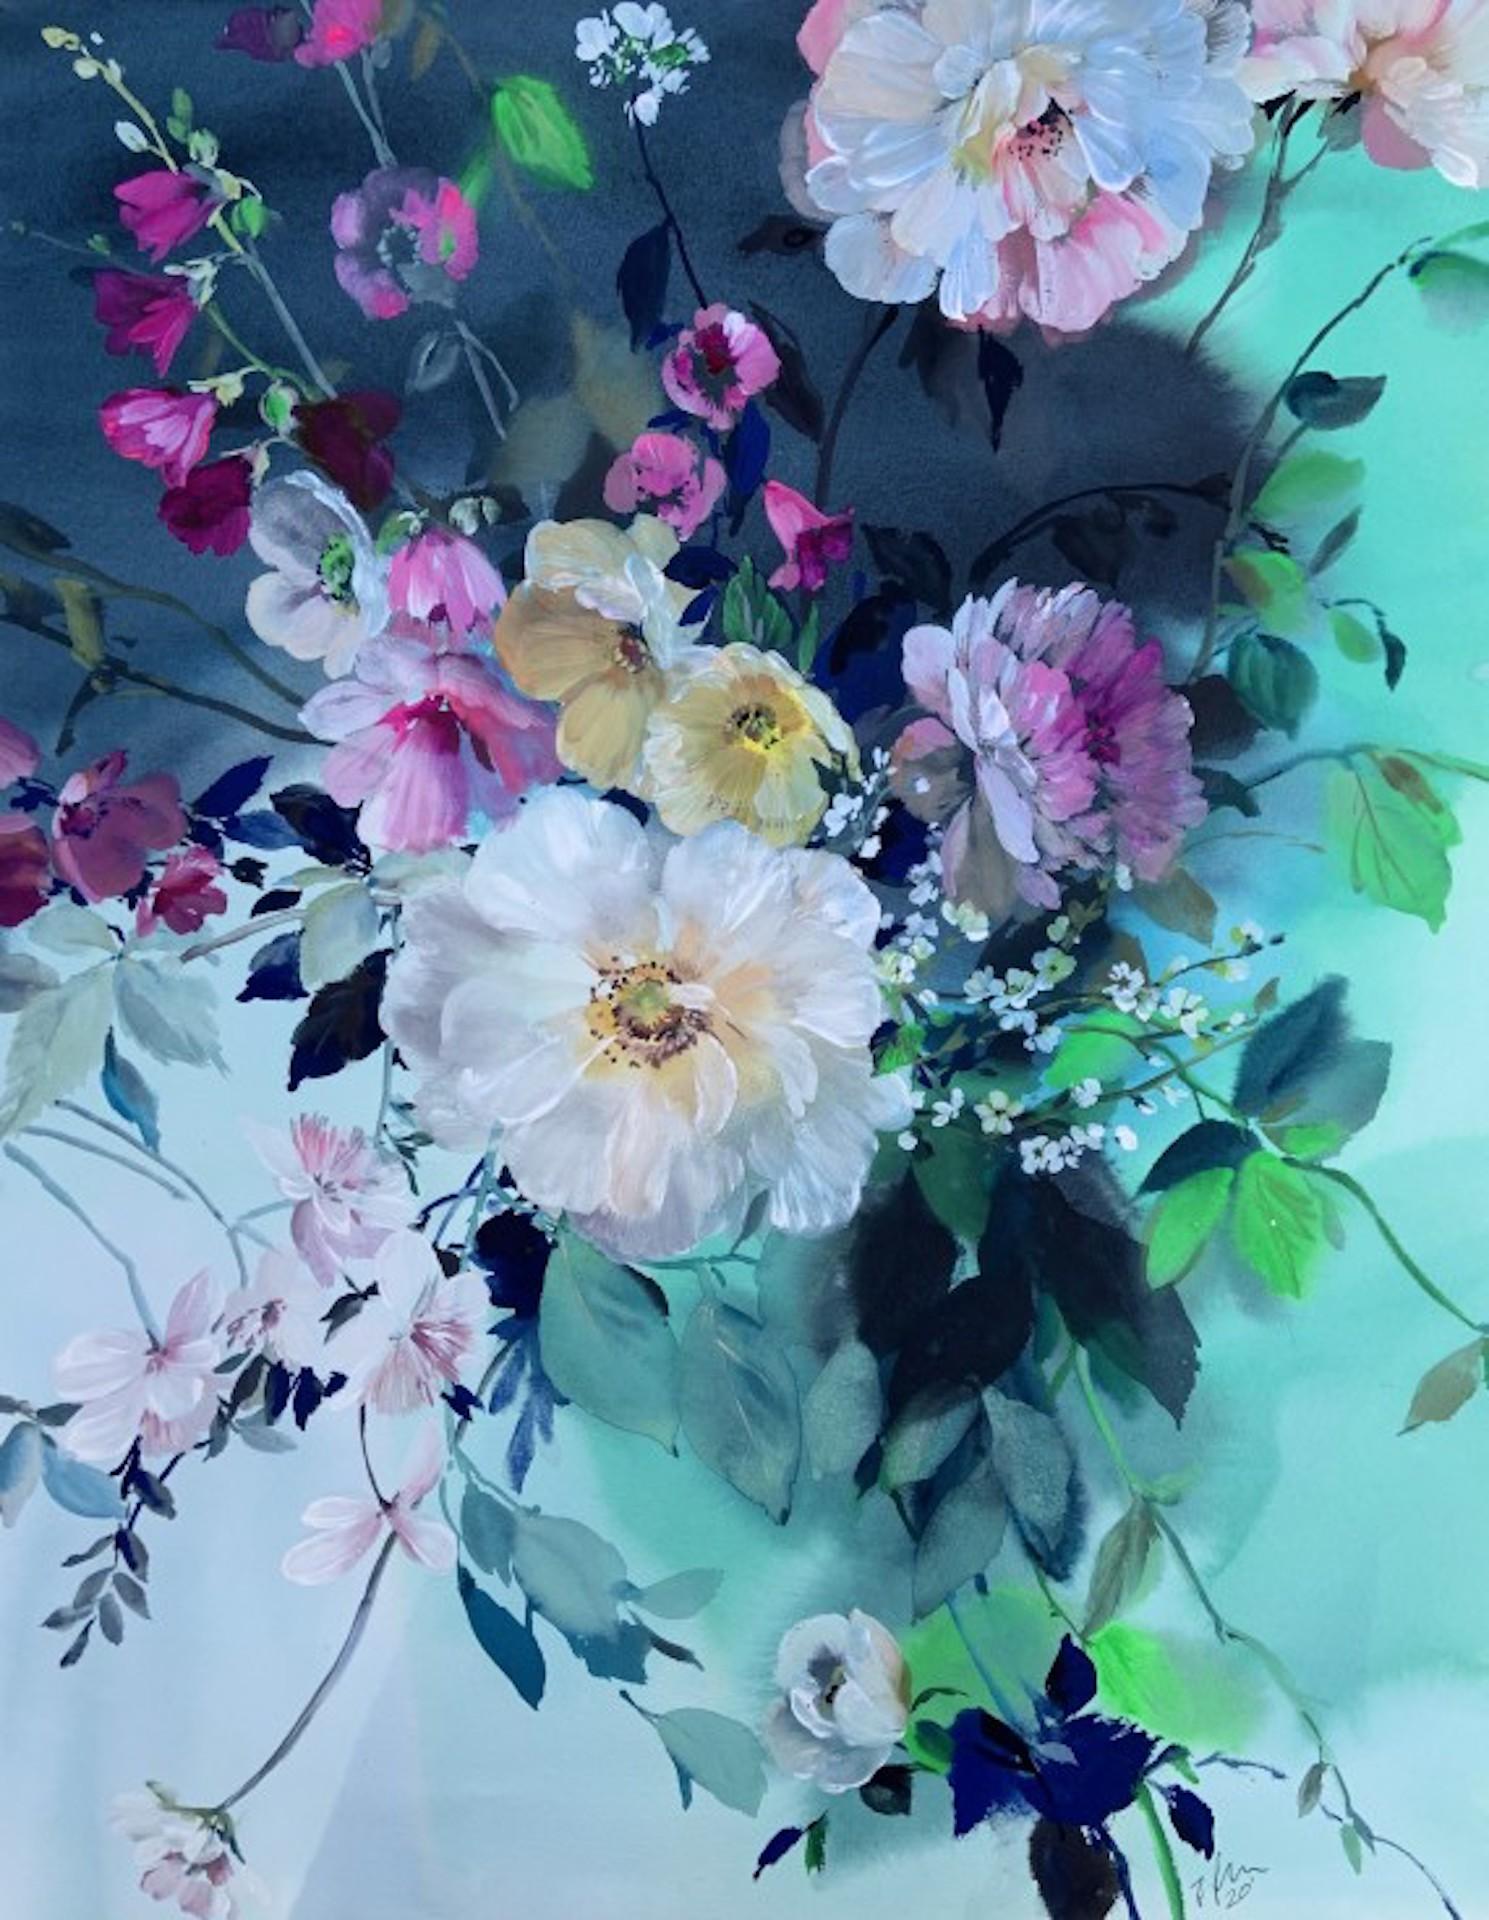 Jo Haran, Longing for Light, Floral Art, Original Mixed Media Painting